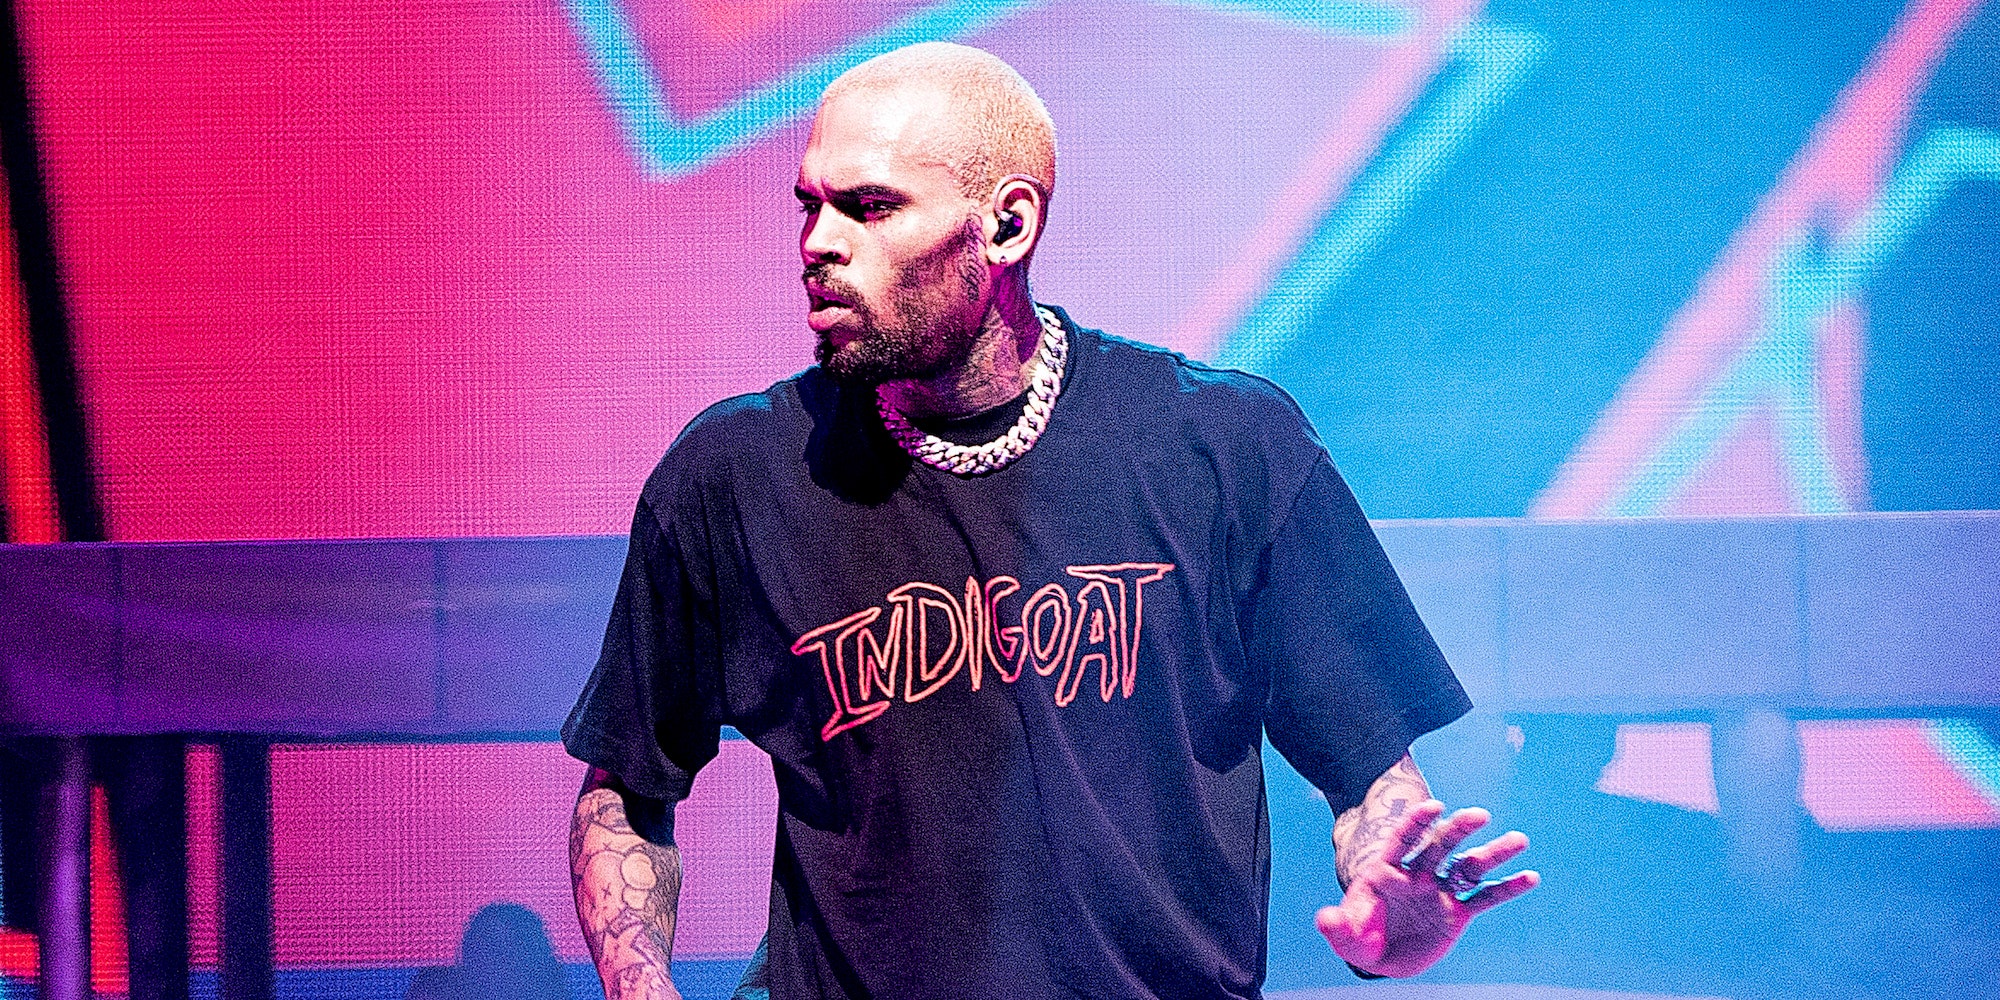 Chris Brown sued; accused of rape by a model